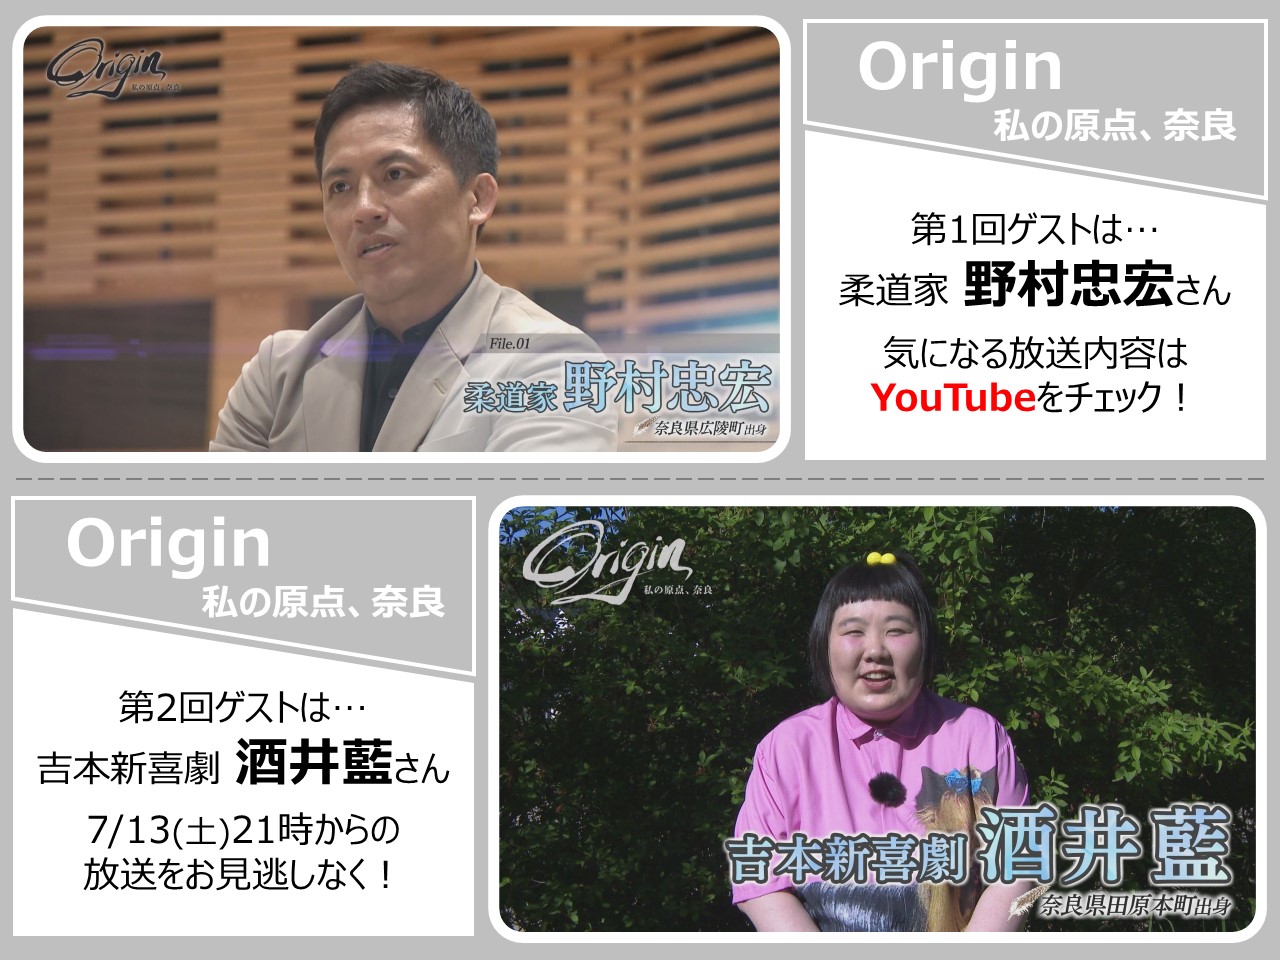 「Origin 私の原点、奈良」をYouTubeで見る